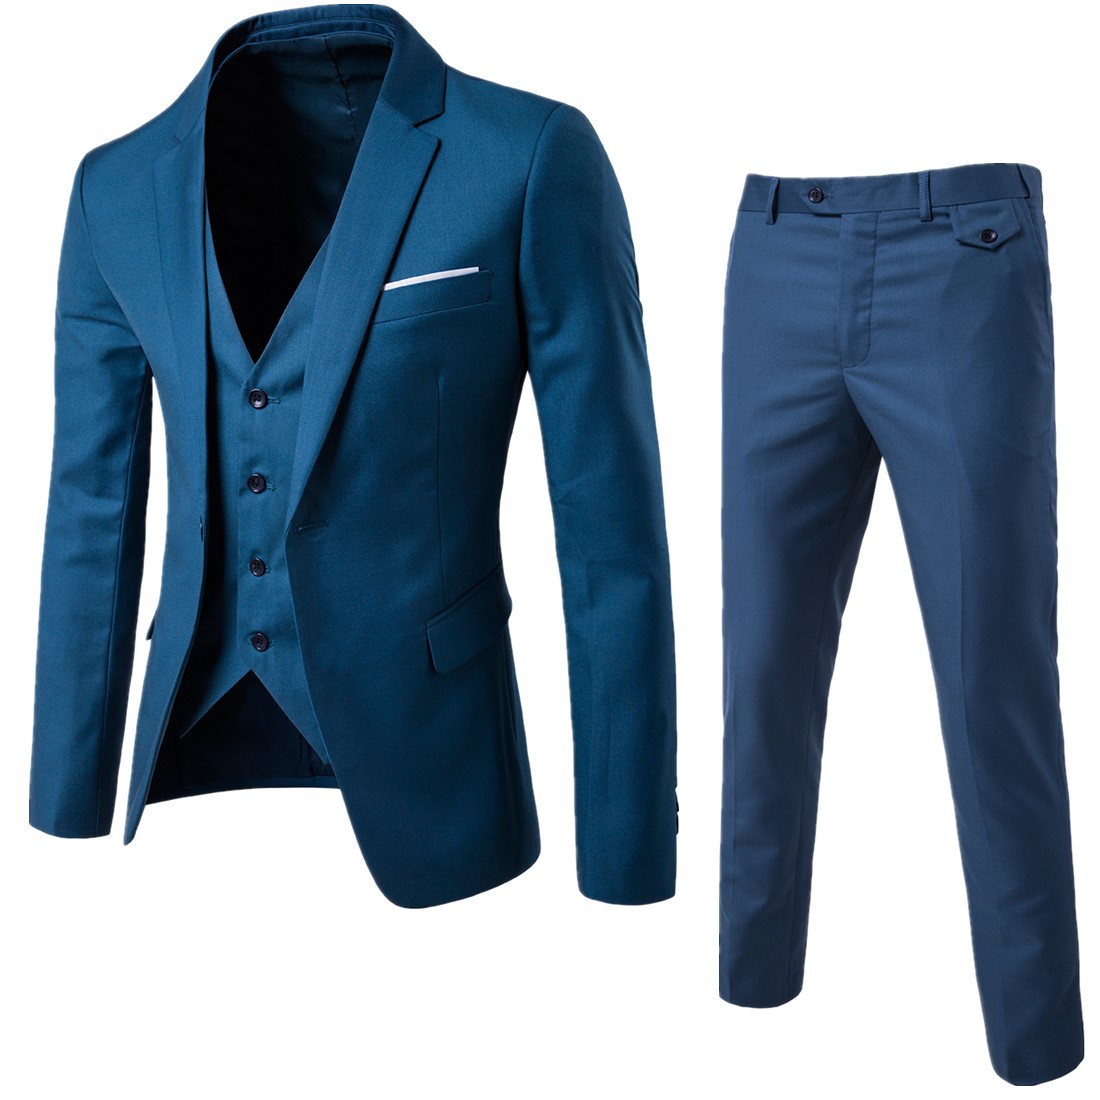 Spring and autumn 2020 men's British slim Plaid suit three piece fashion men's casual dress suit fashion